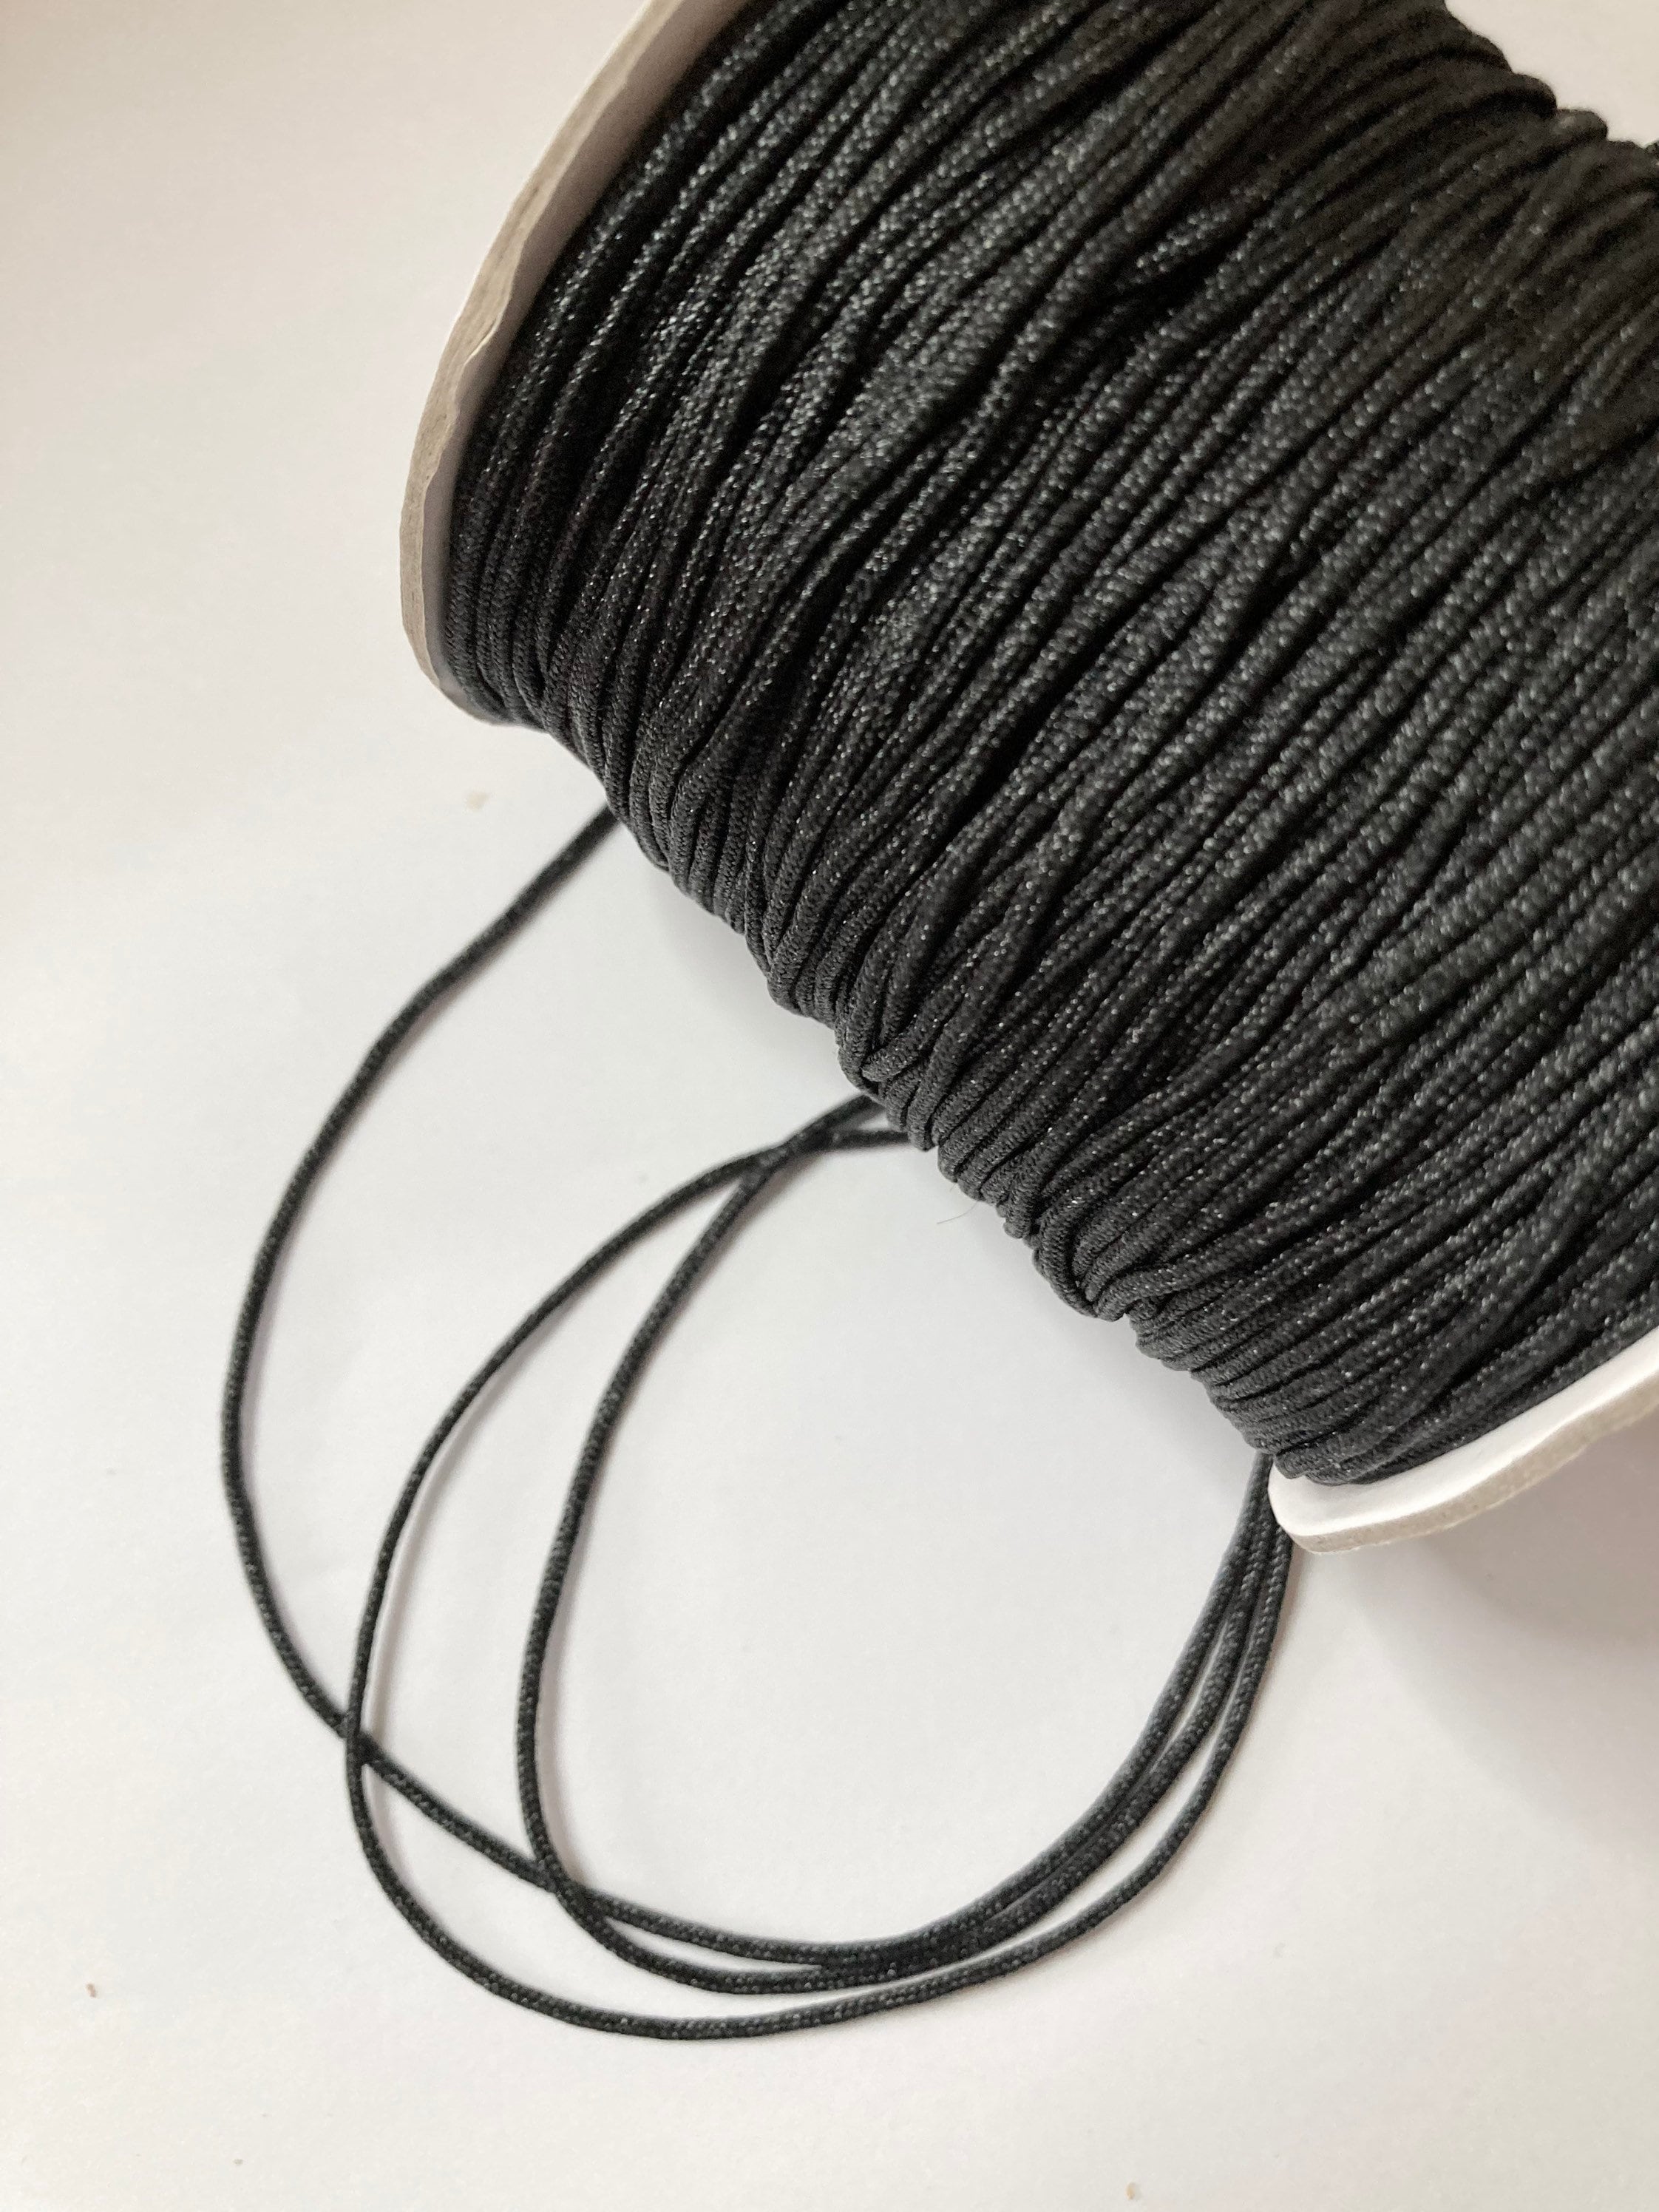 Black Nylon Thread 1.5mm Thickness, for Macrame, Beading, Bracelet Making  Etc. Strong Durable Thread, Multiple Length Options 